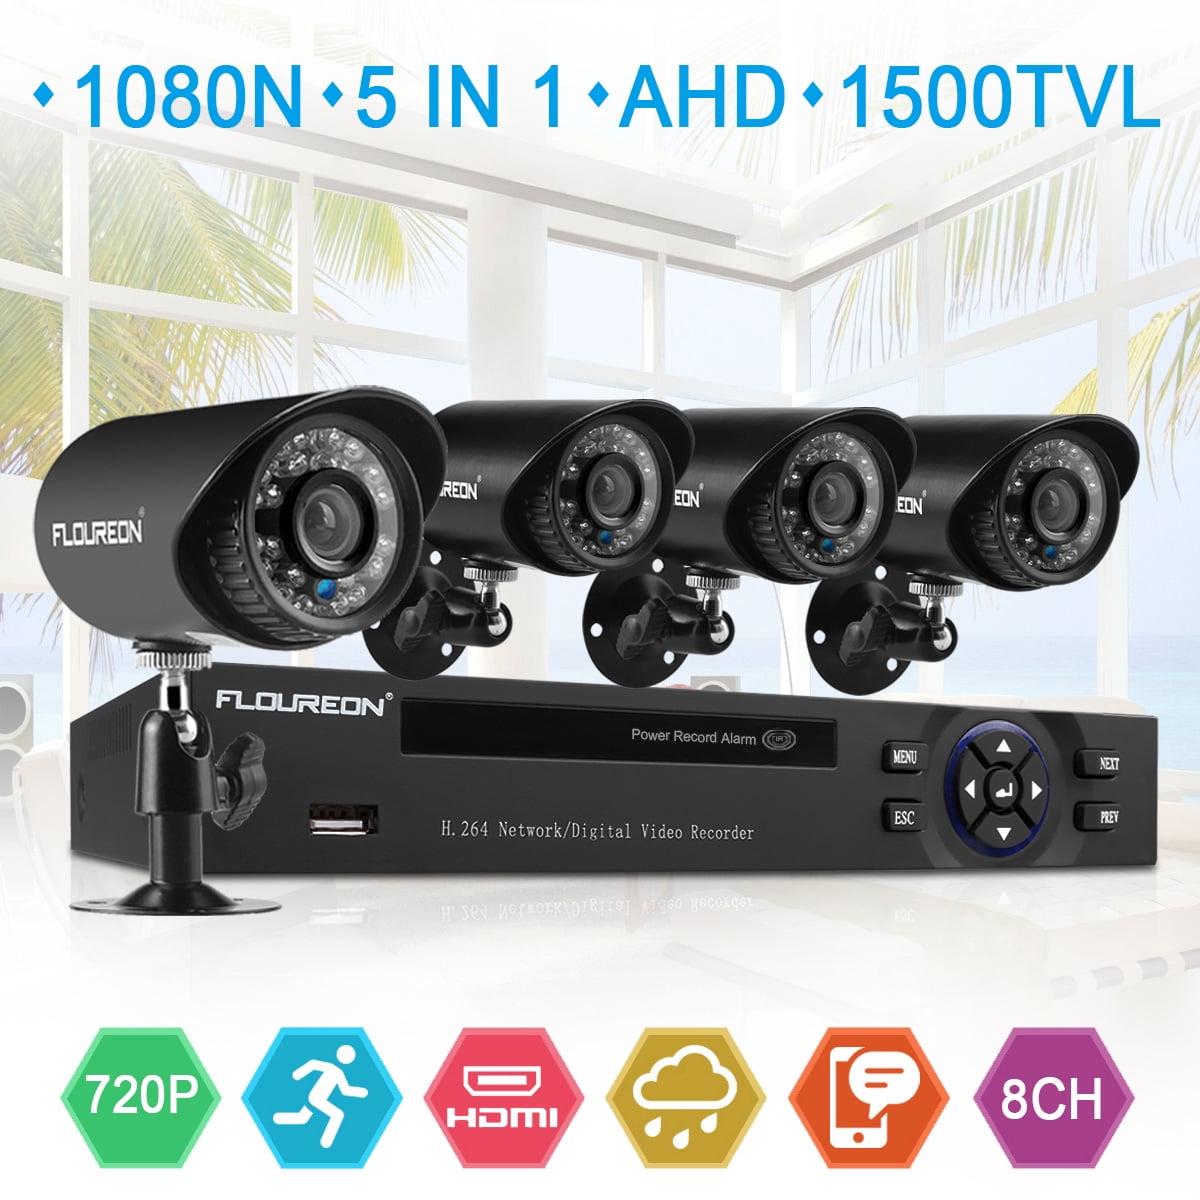 4CH 1080N CCTV HDMI DVR 1500TVL Outdoor 720P Security Camera System No HDD IP66 